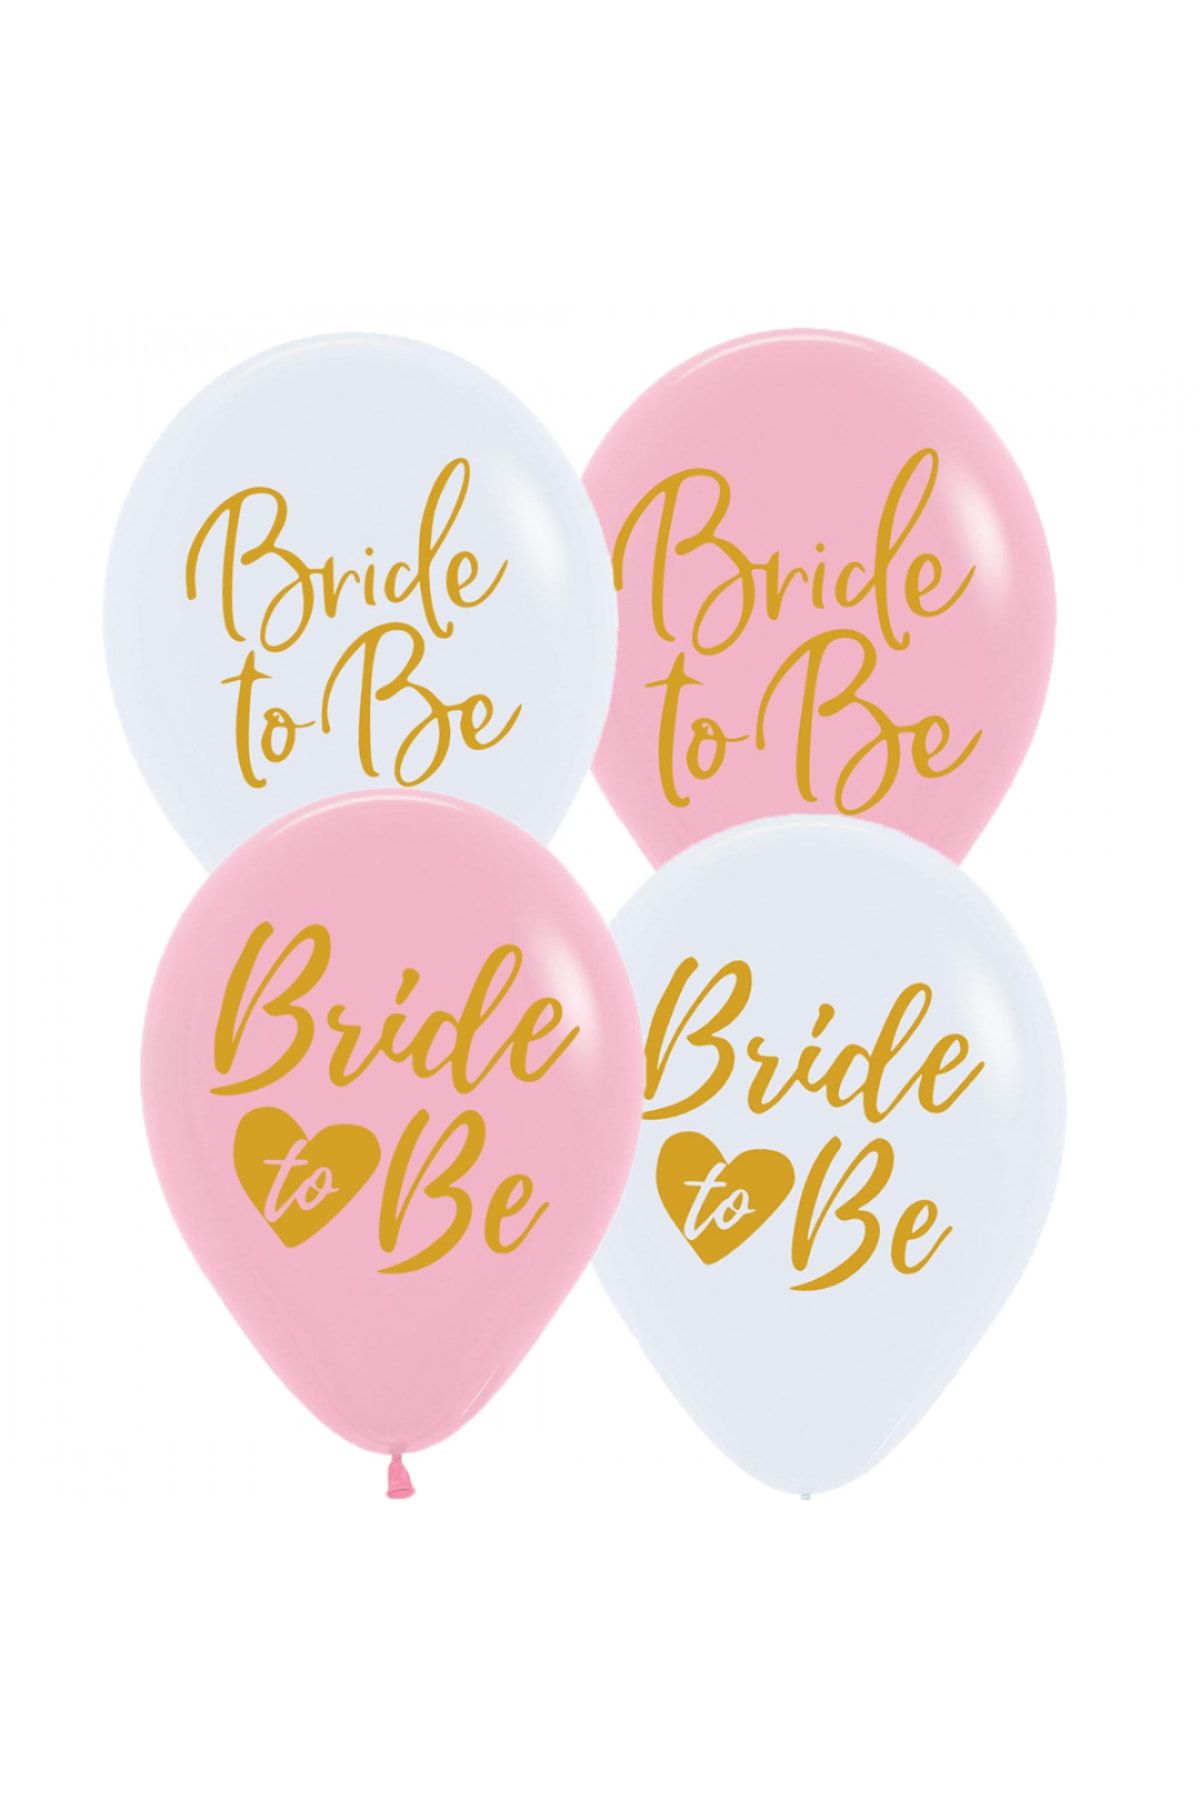 Huzur Party Store Bride To Be Yazılı 10 Adet Balon Kırık Beyaz Pudra Pembe Renkli Bekarlığa Veda Partisi Konsept